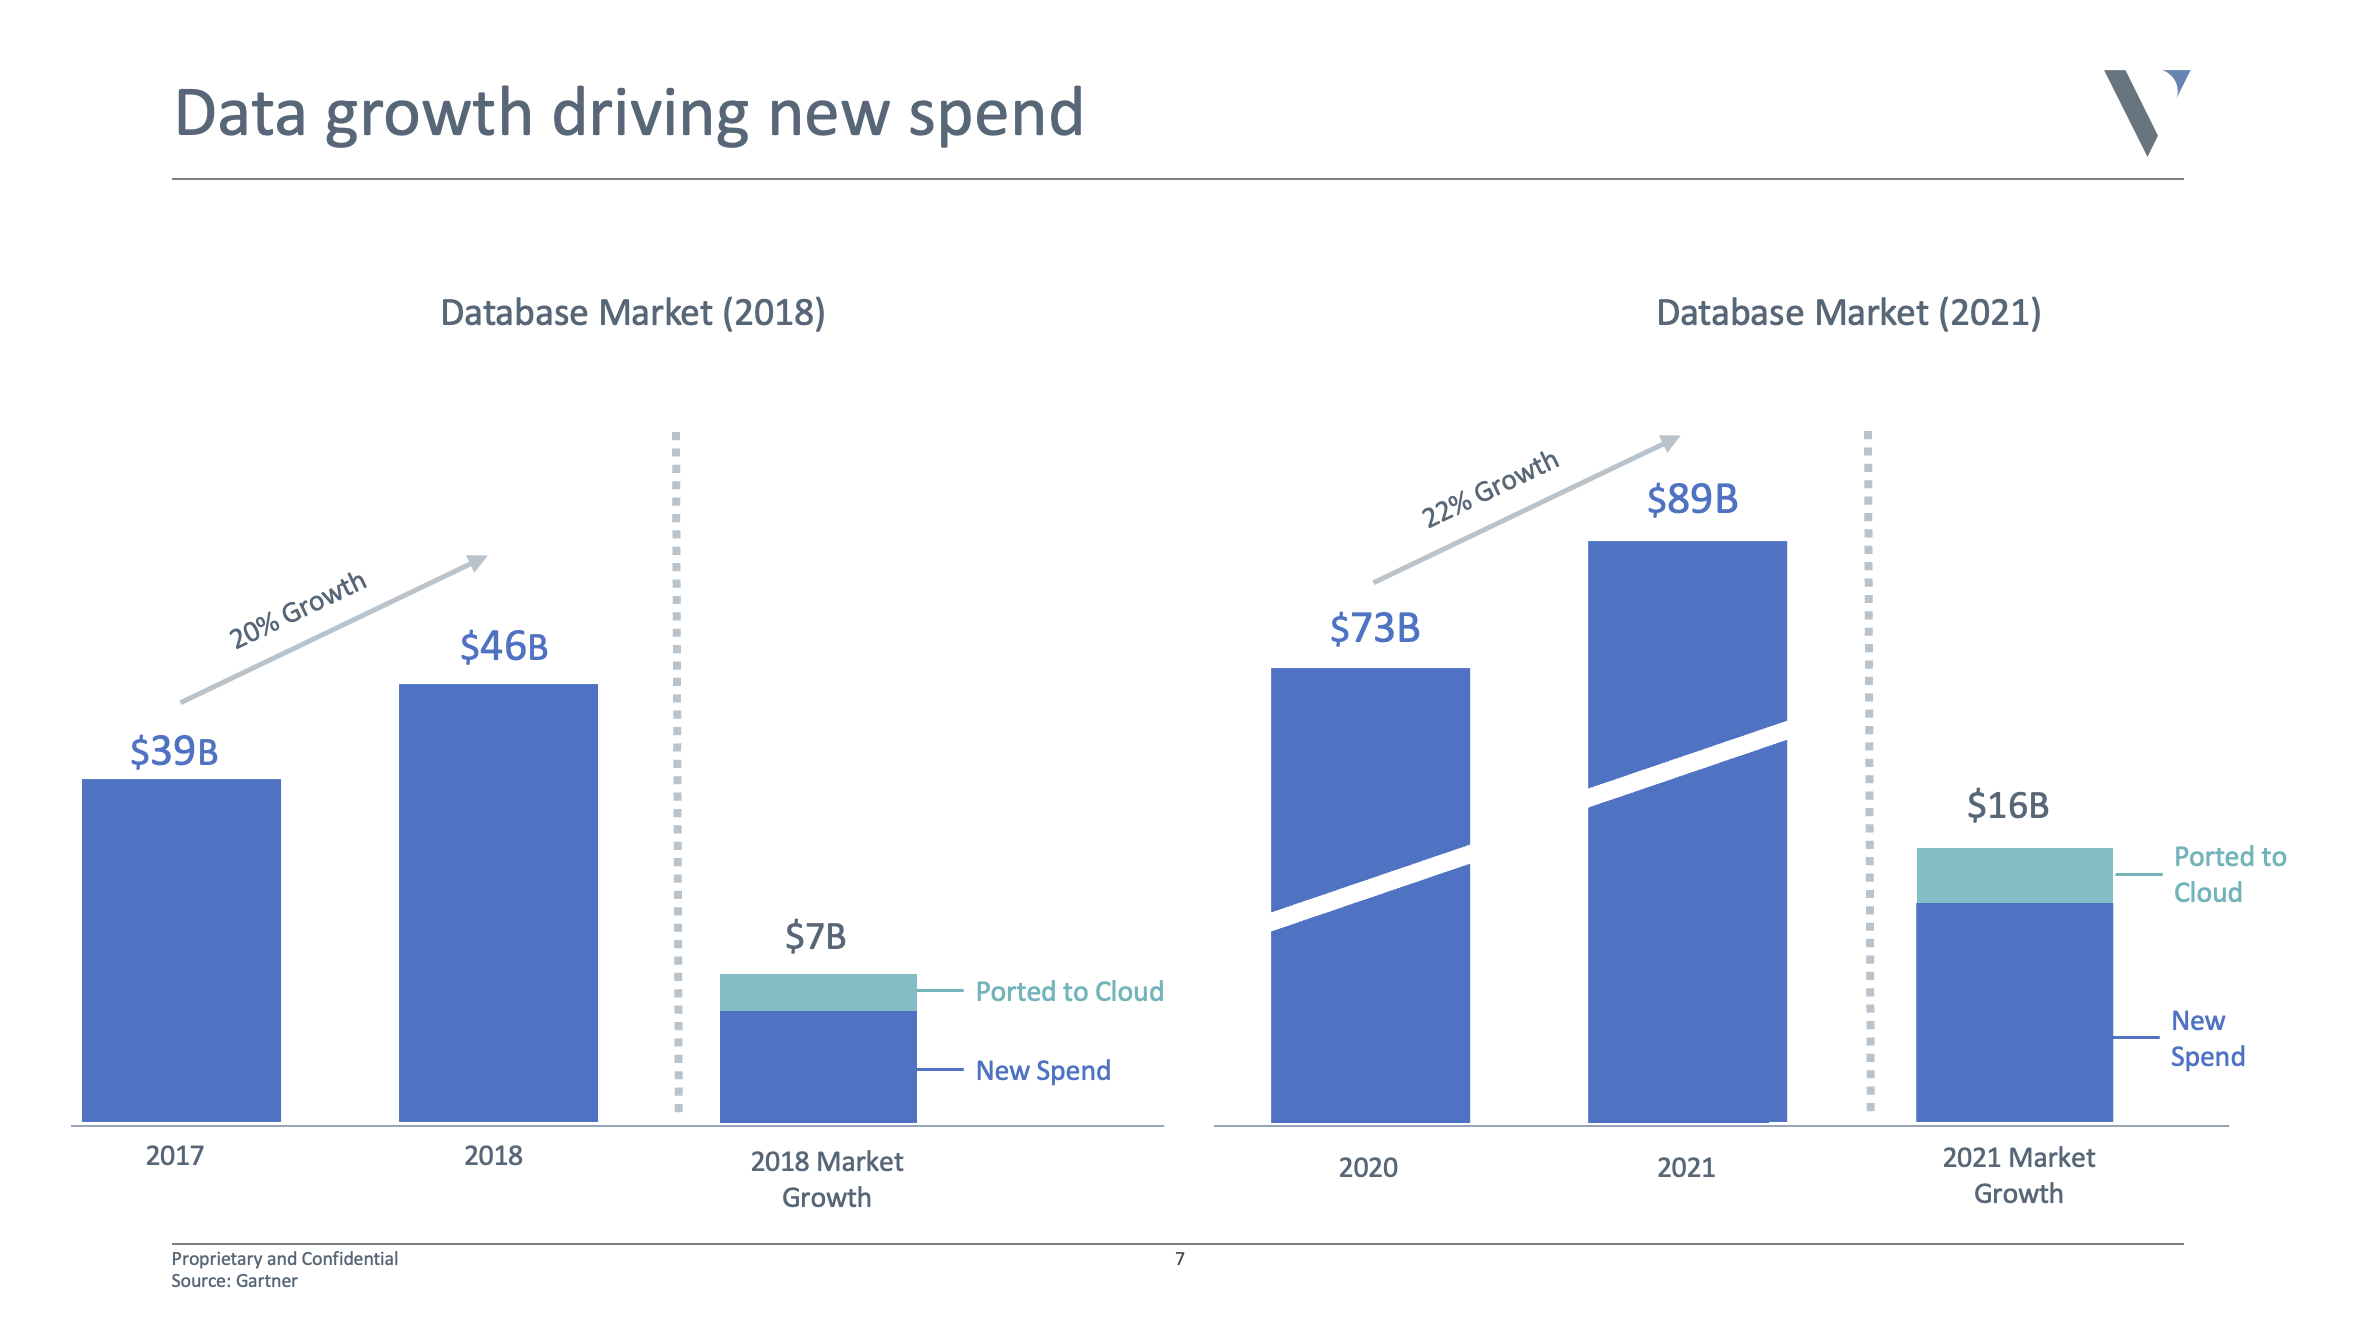 Database growth drives spending in the enterprise